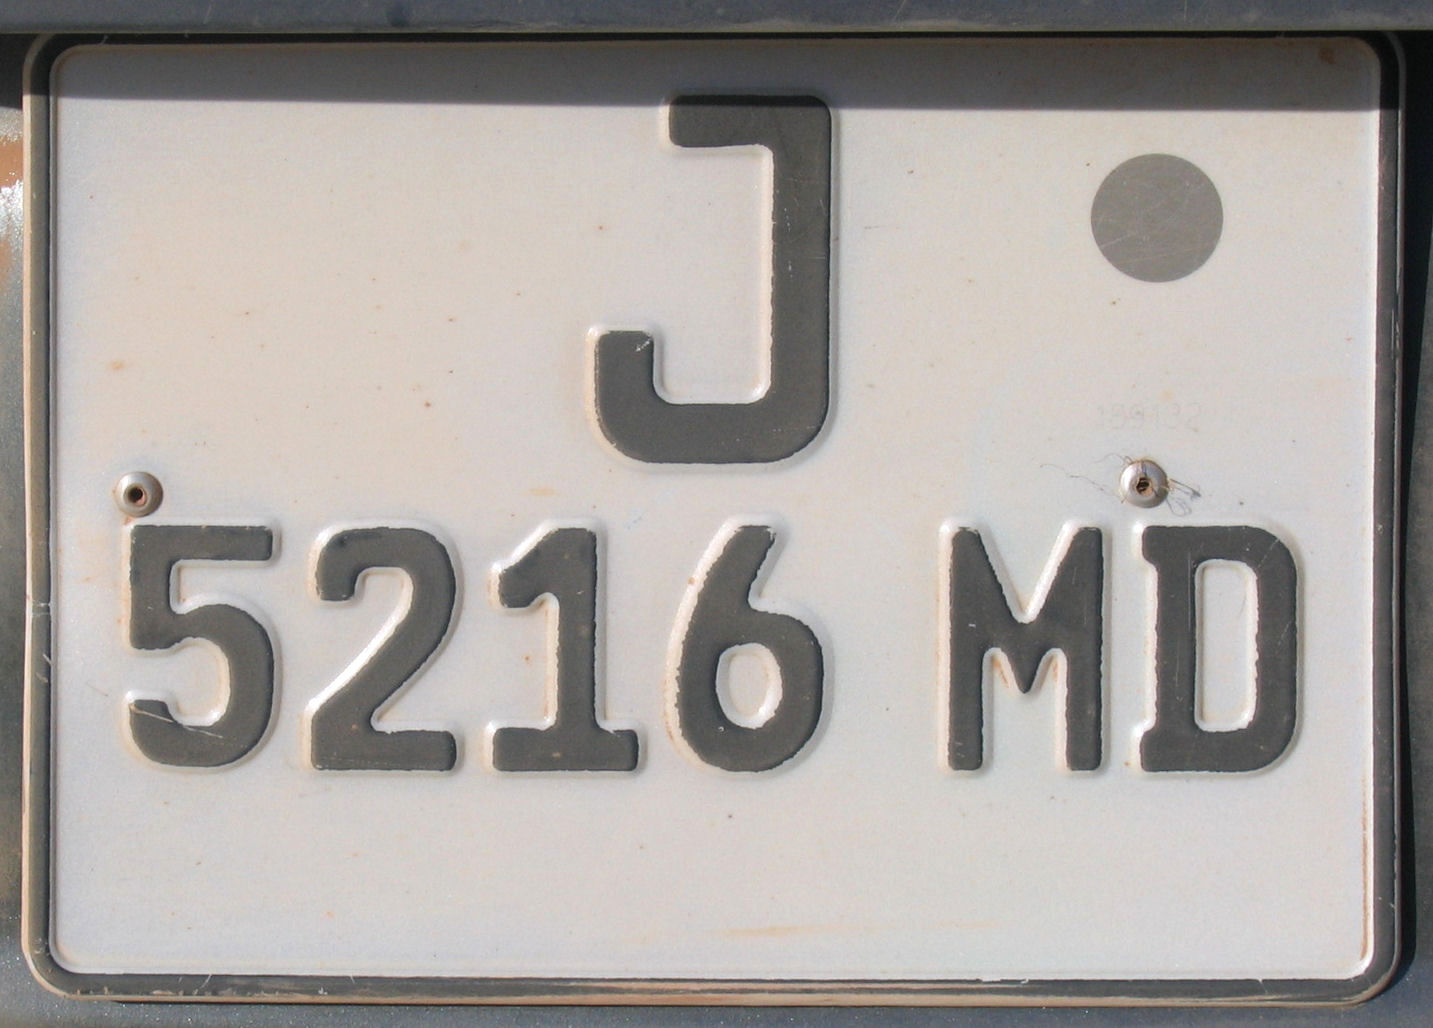 RMM_1998-J5216MD-PHd_Eu140.jpg